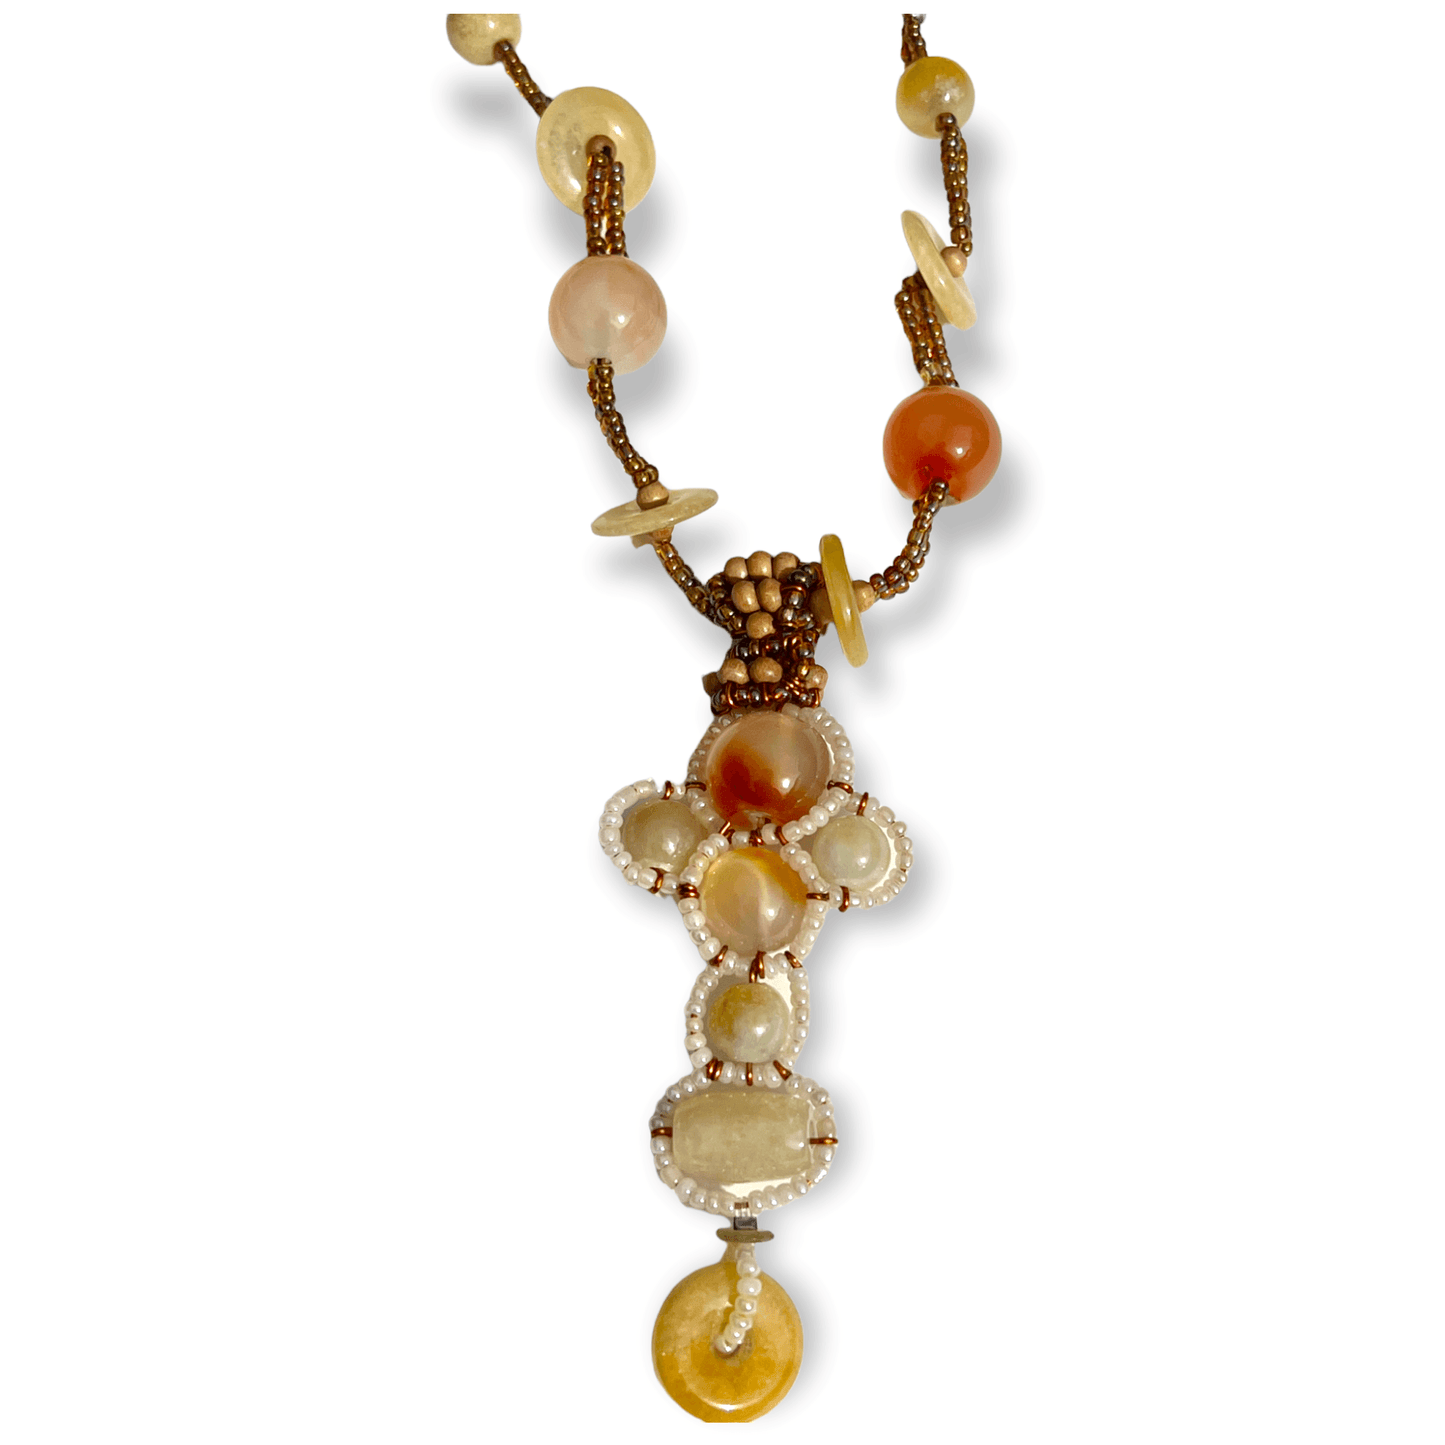 Earth tone amber pendant necklace makes a statement - Sundara Joon